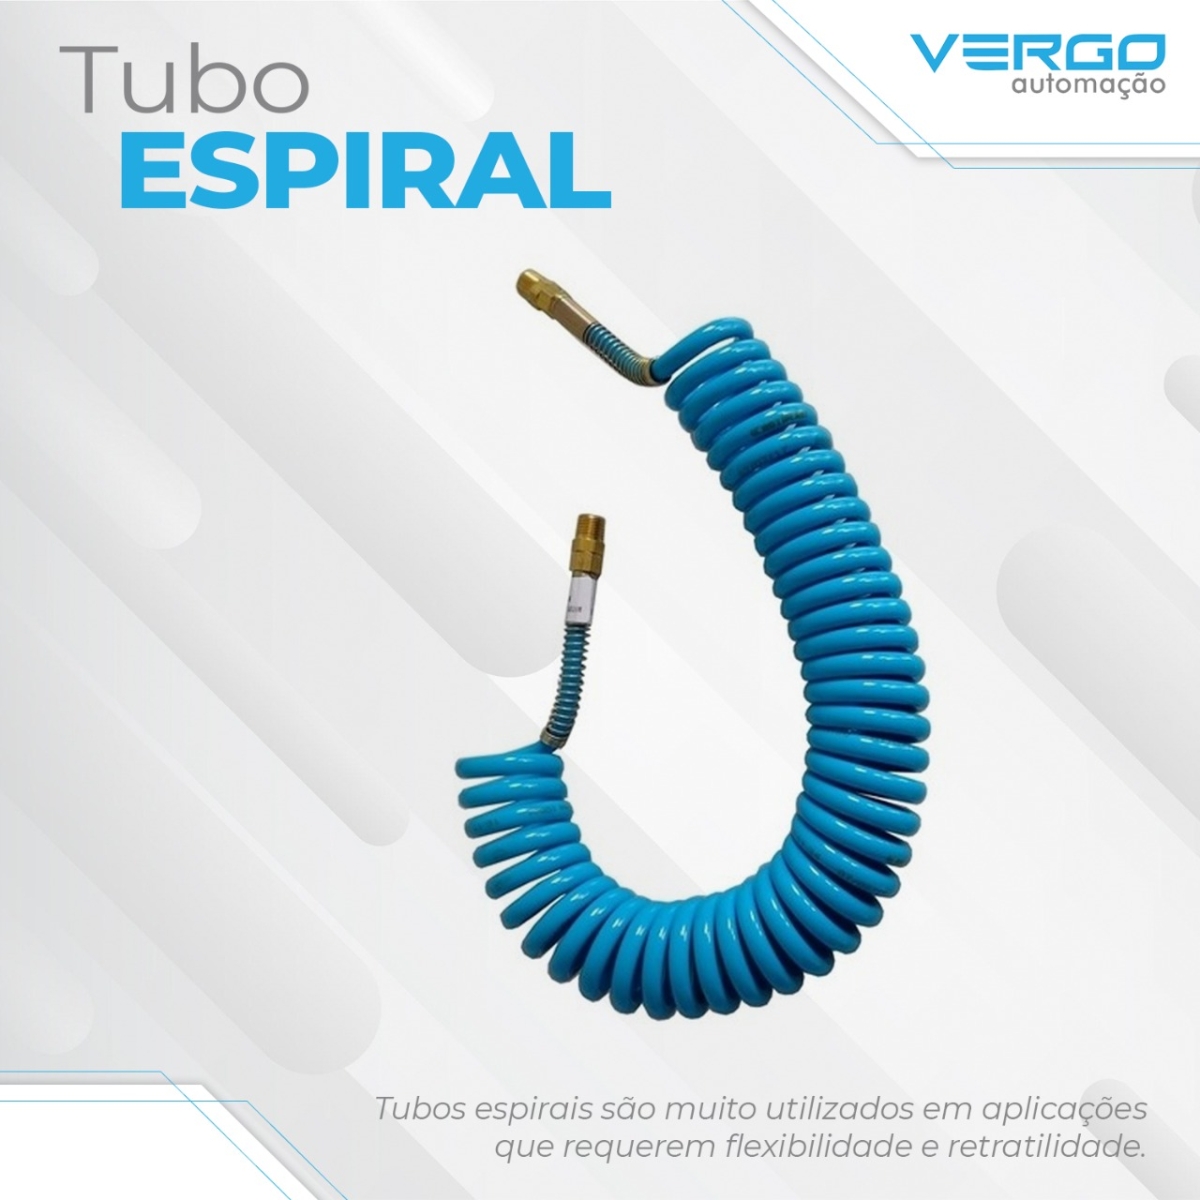 Tubo espiral